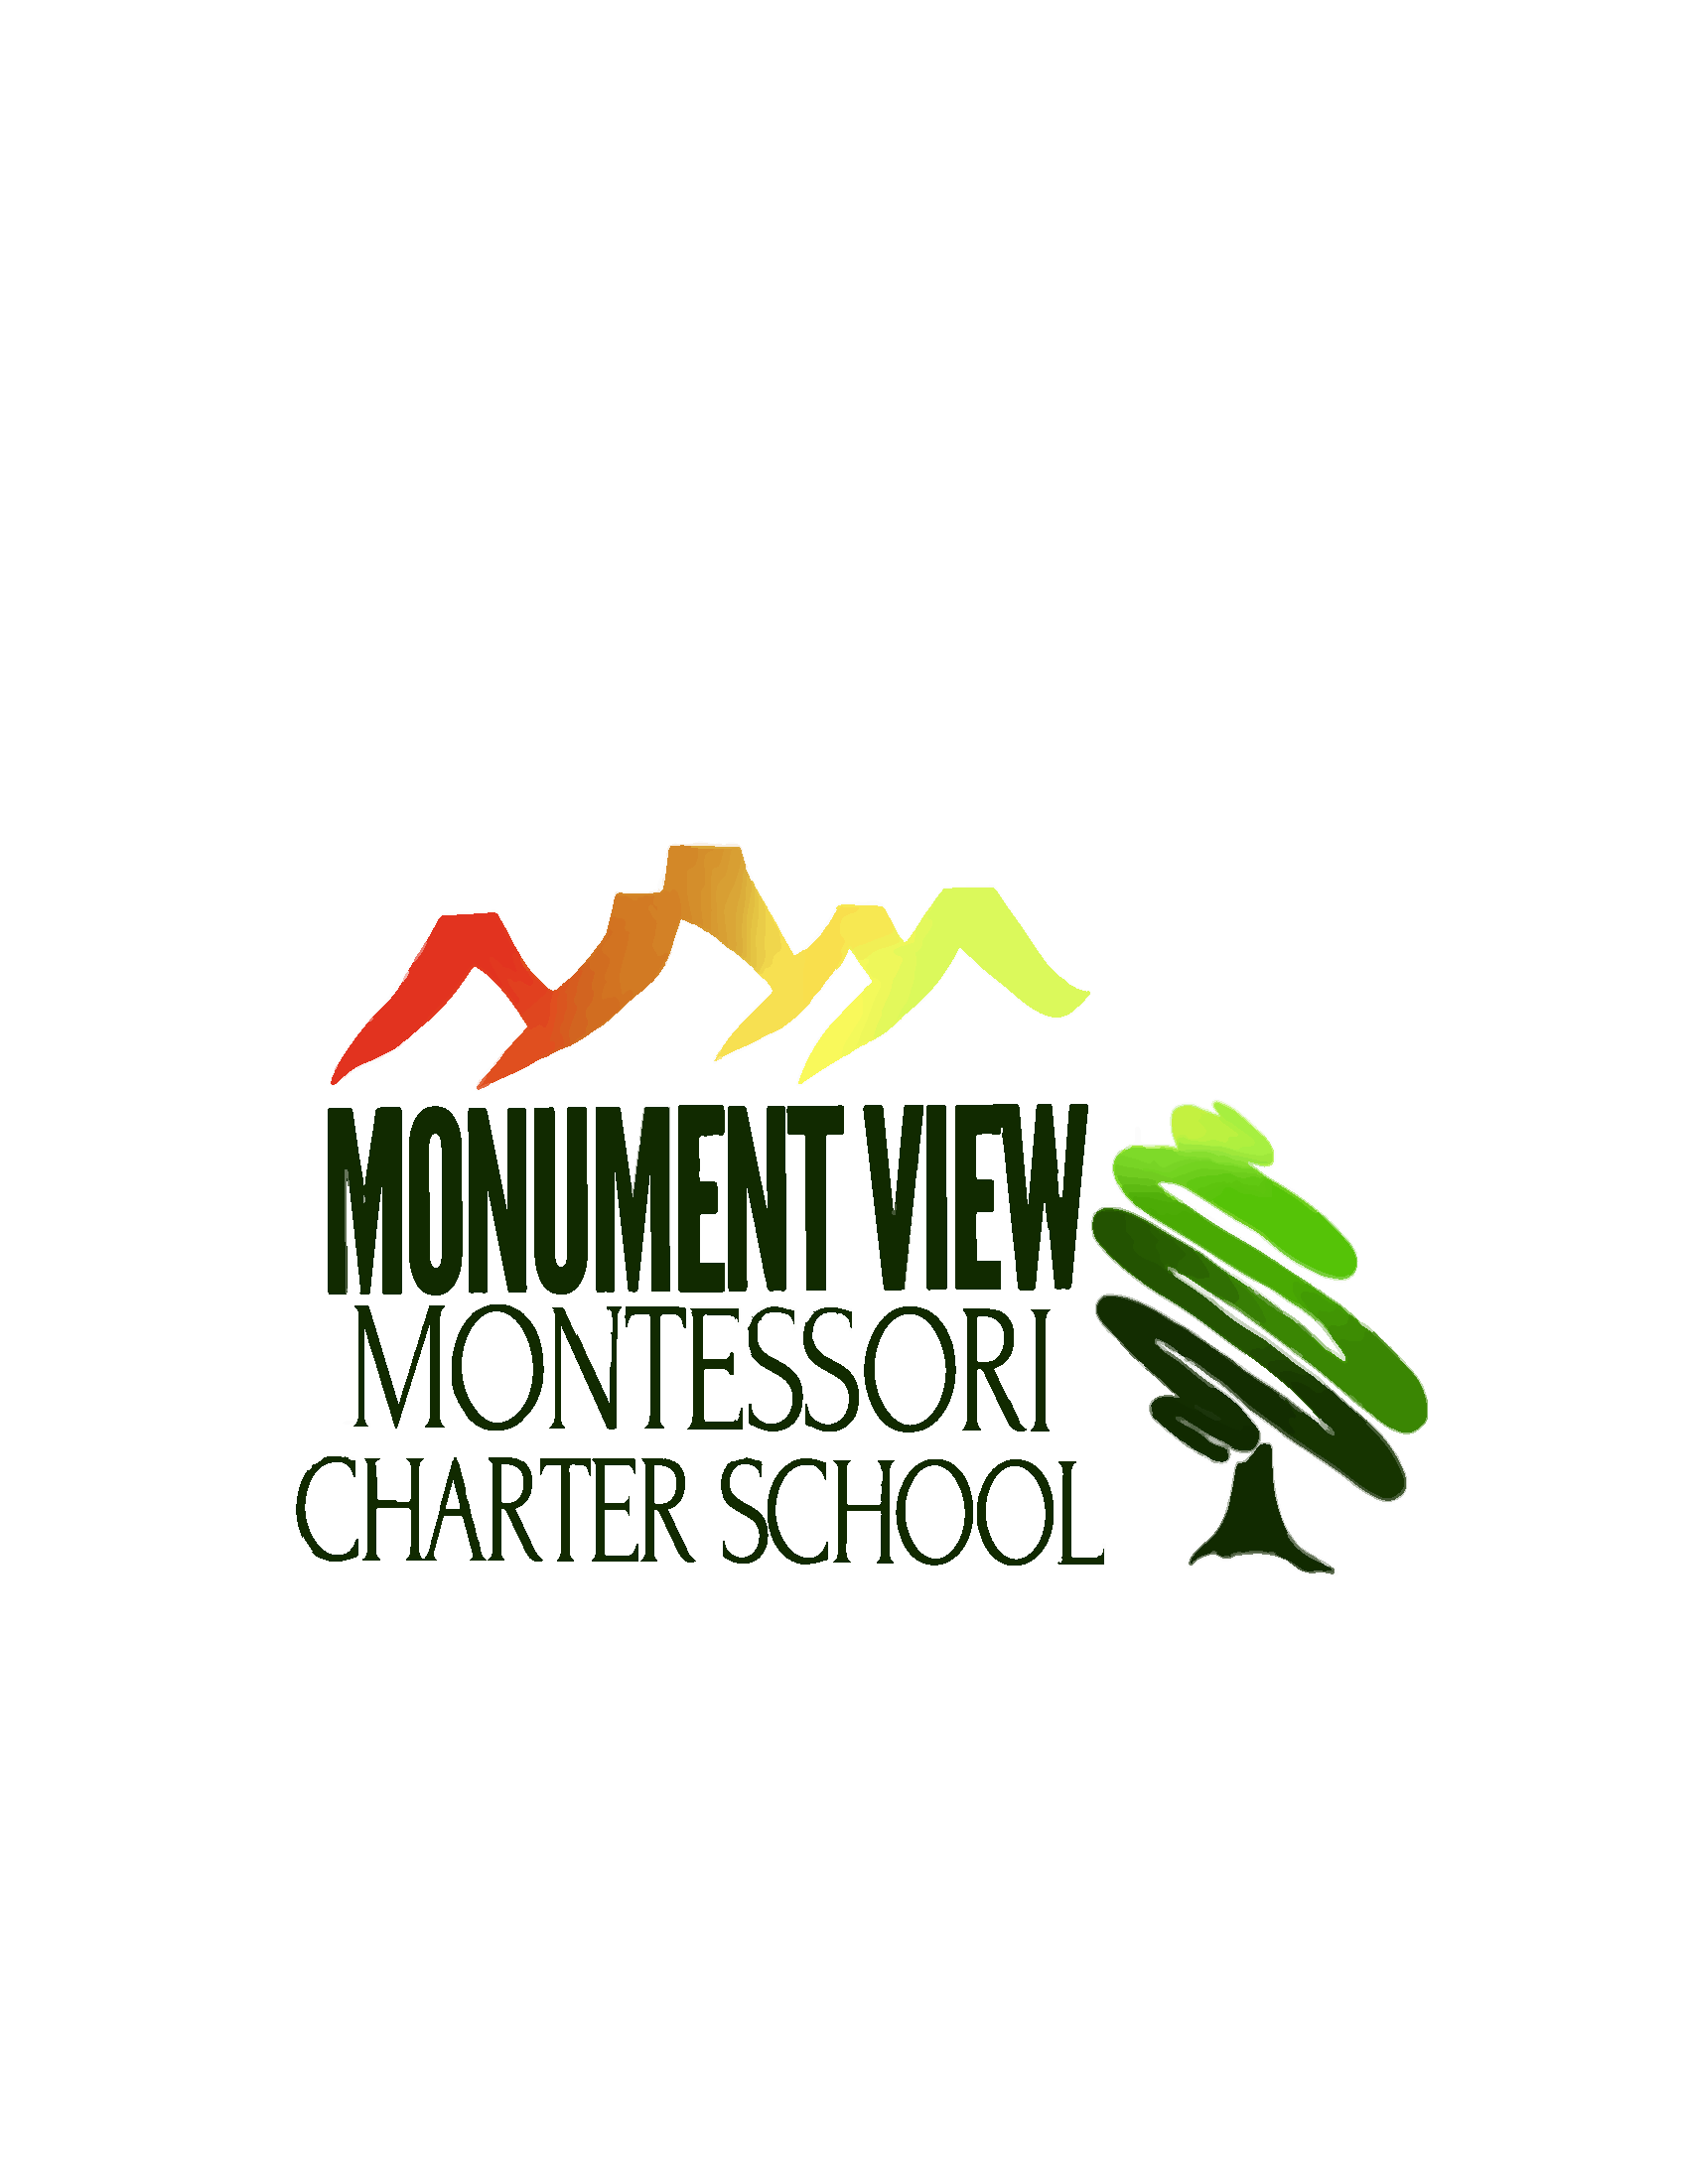 Monument View Montessori Charter School